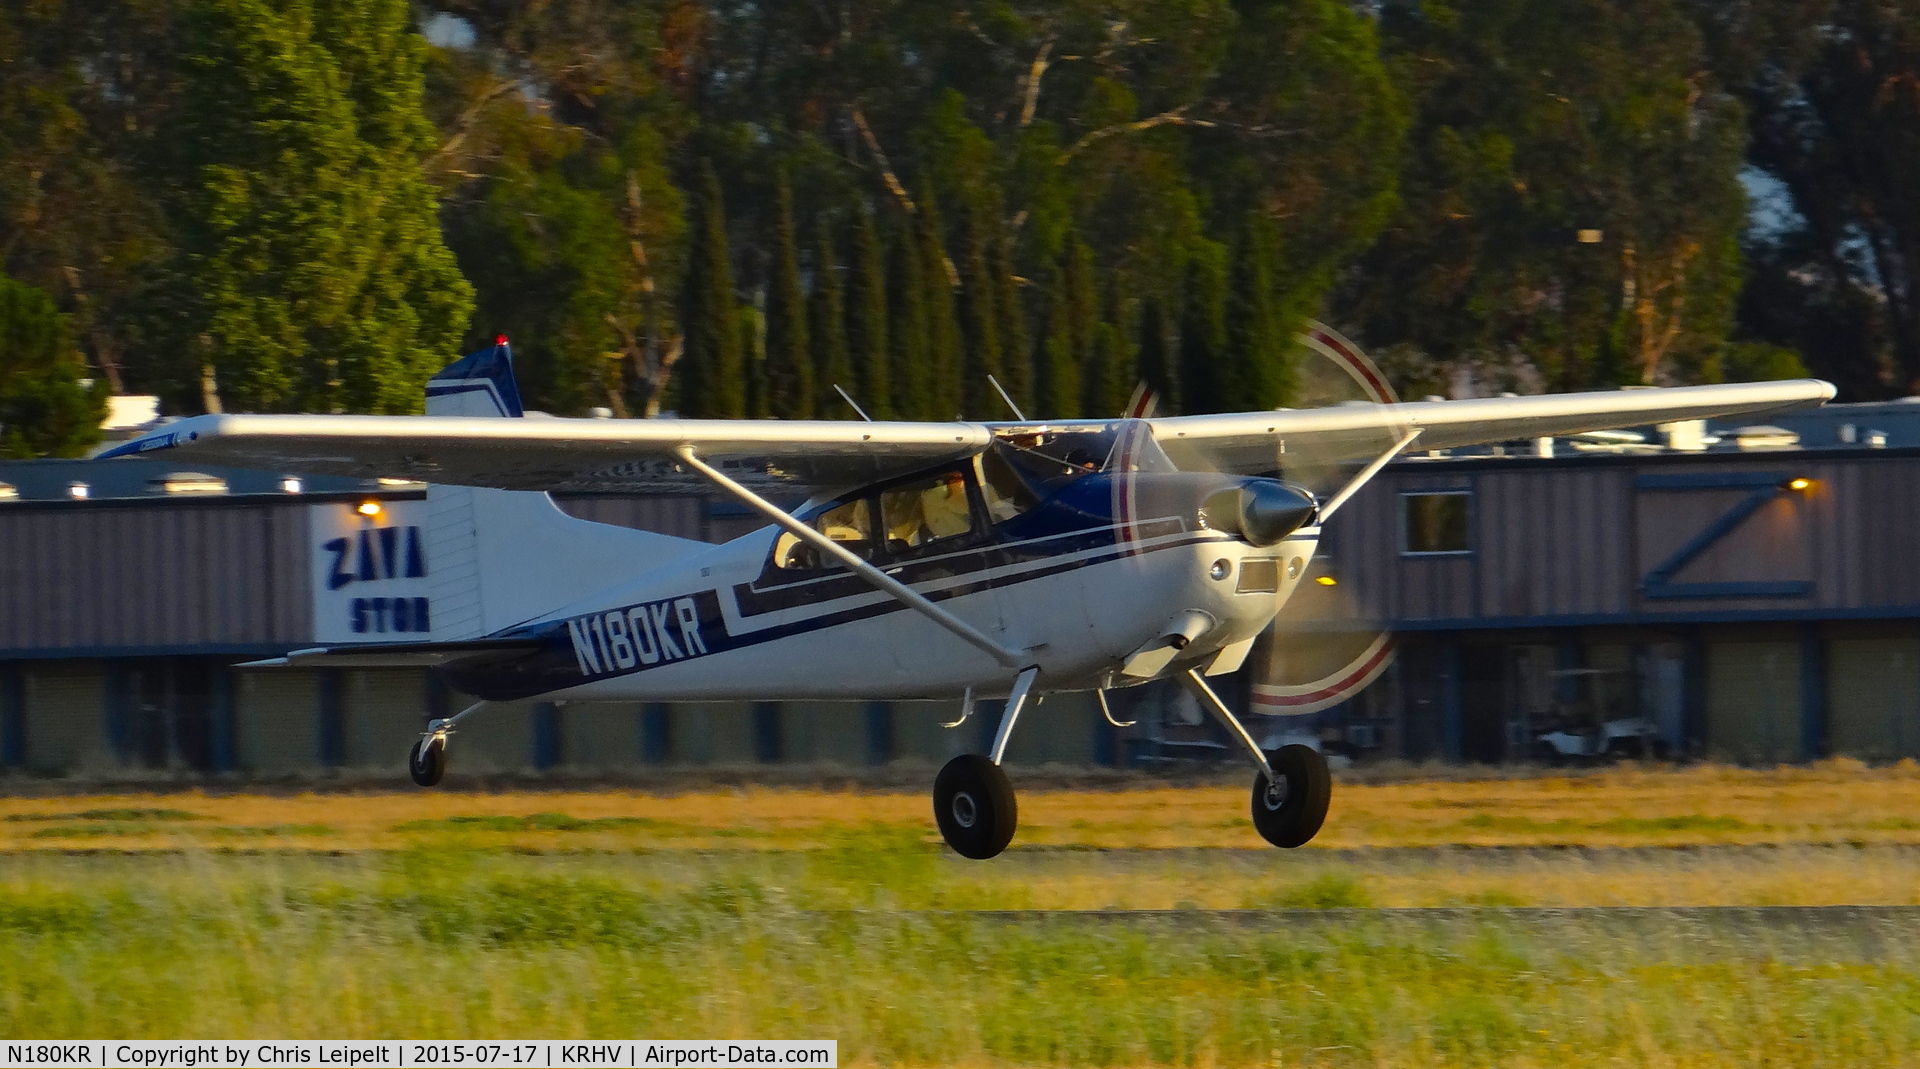 N180KR, 1980 Cessna 180K Skywagon C/N 18053147, Locally-based 1980 Cessna 180K departing on runway 31R at Reid Hillview Airport, San Jose, CA.